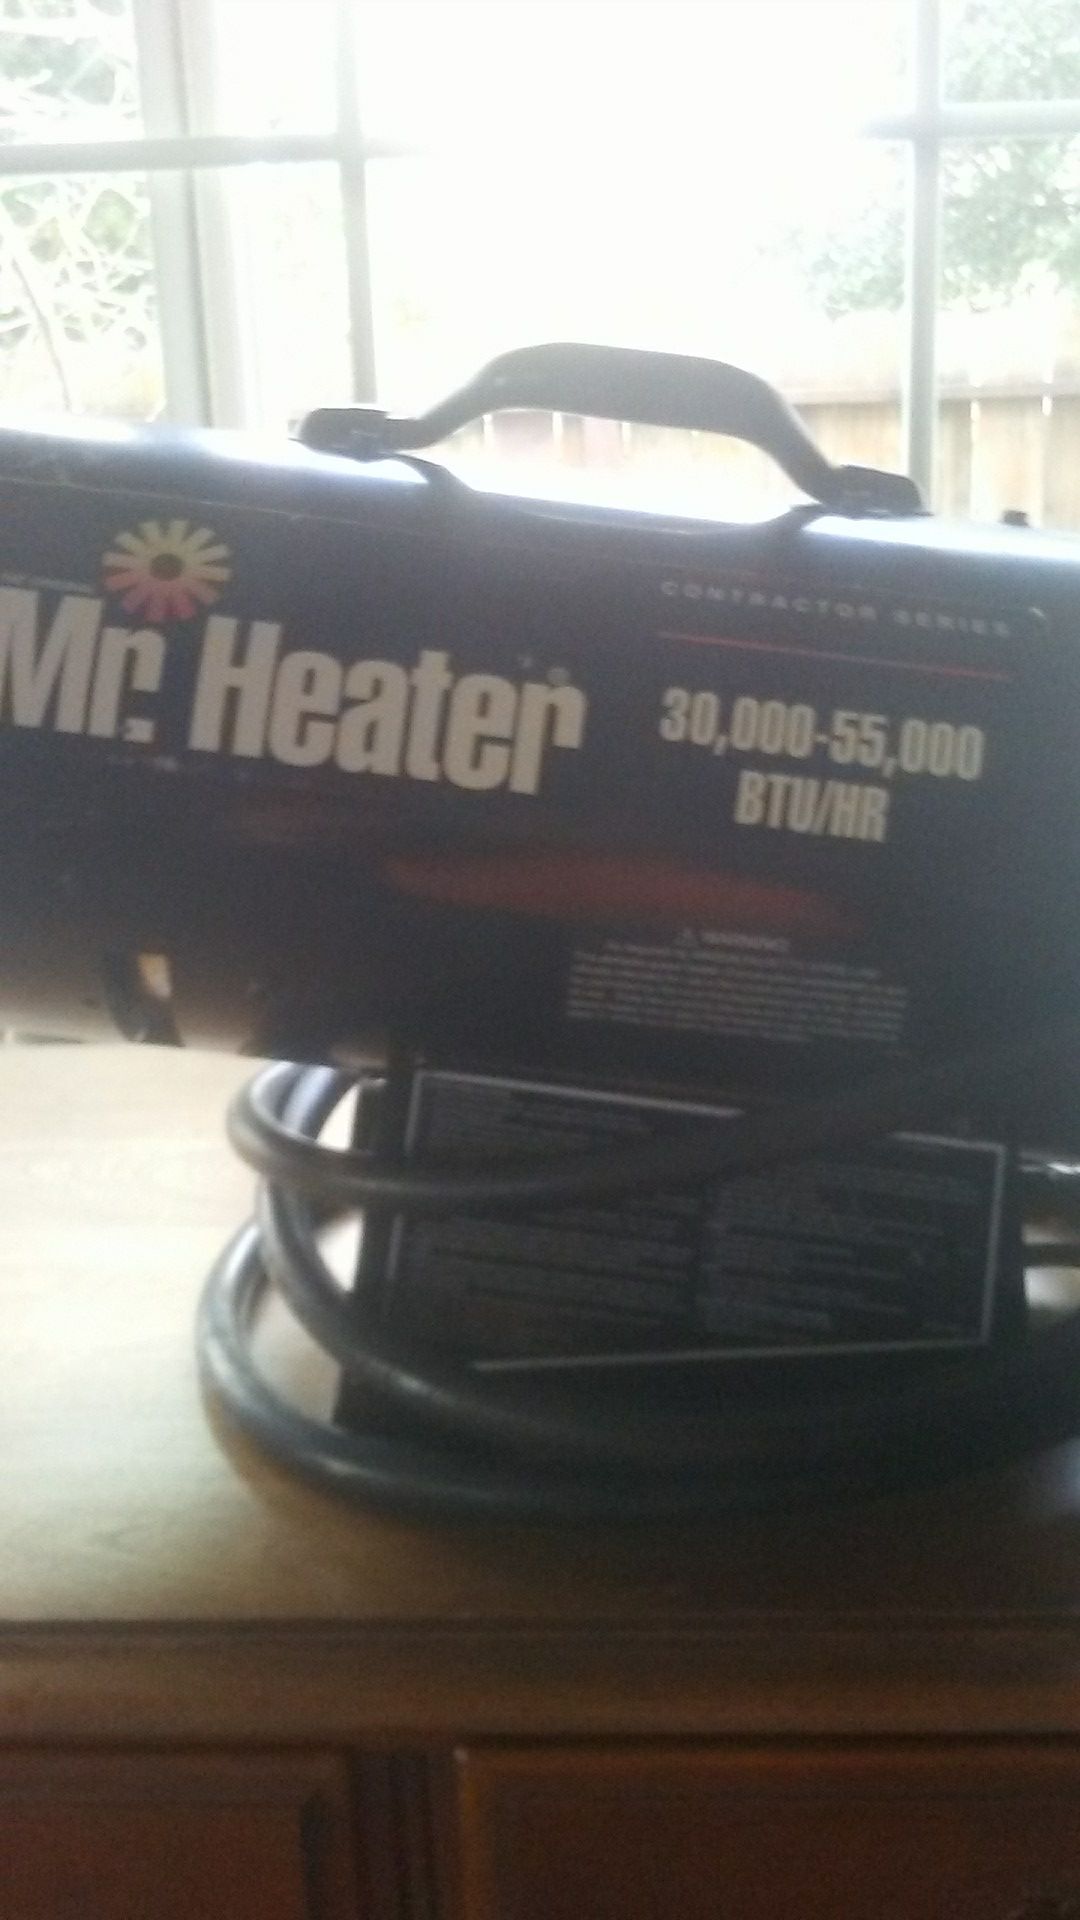 Mr heater contractor series 30.000 55.000 btus propane elec